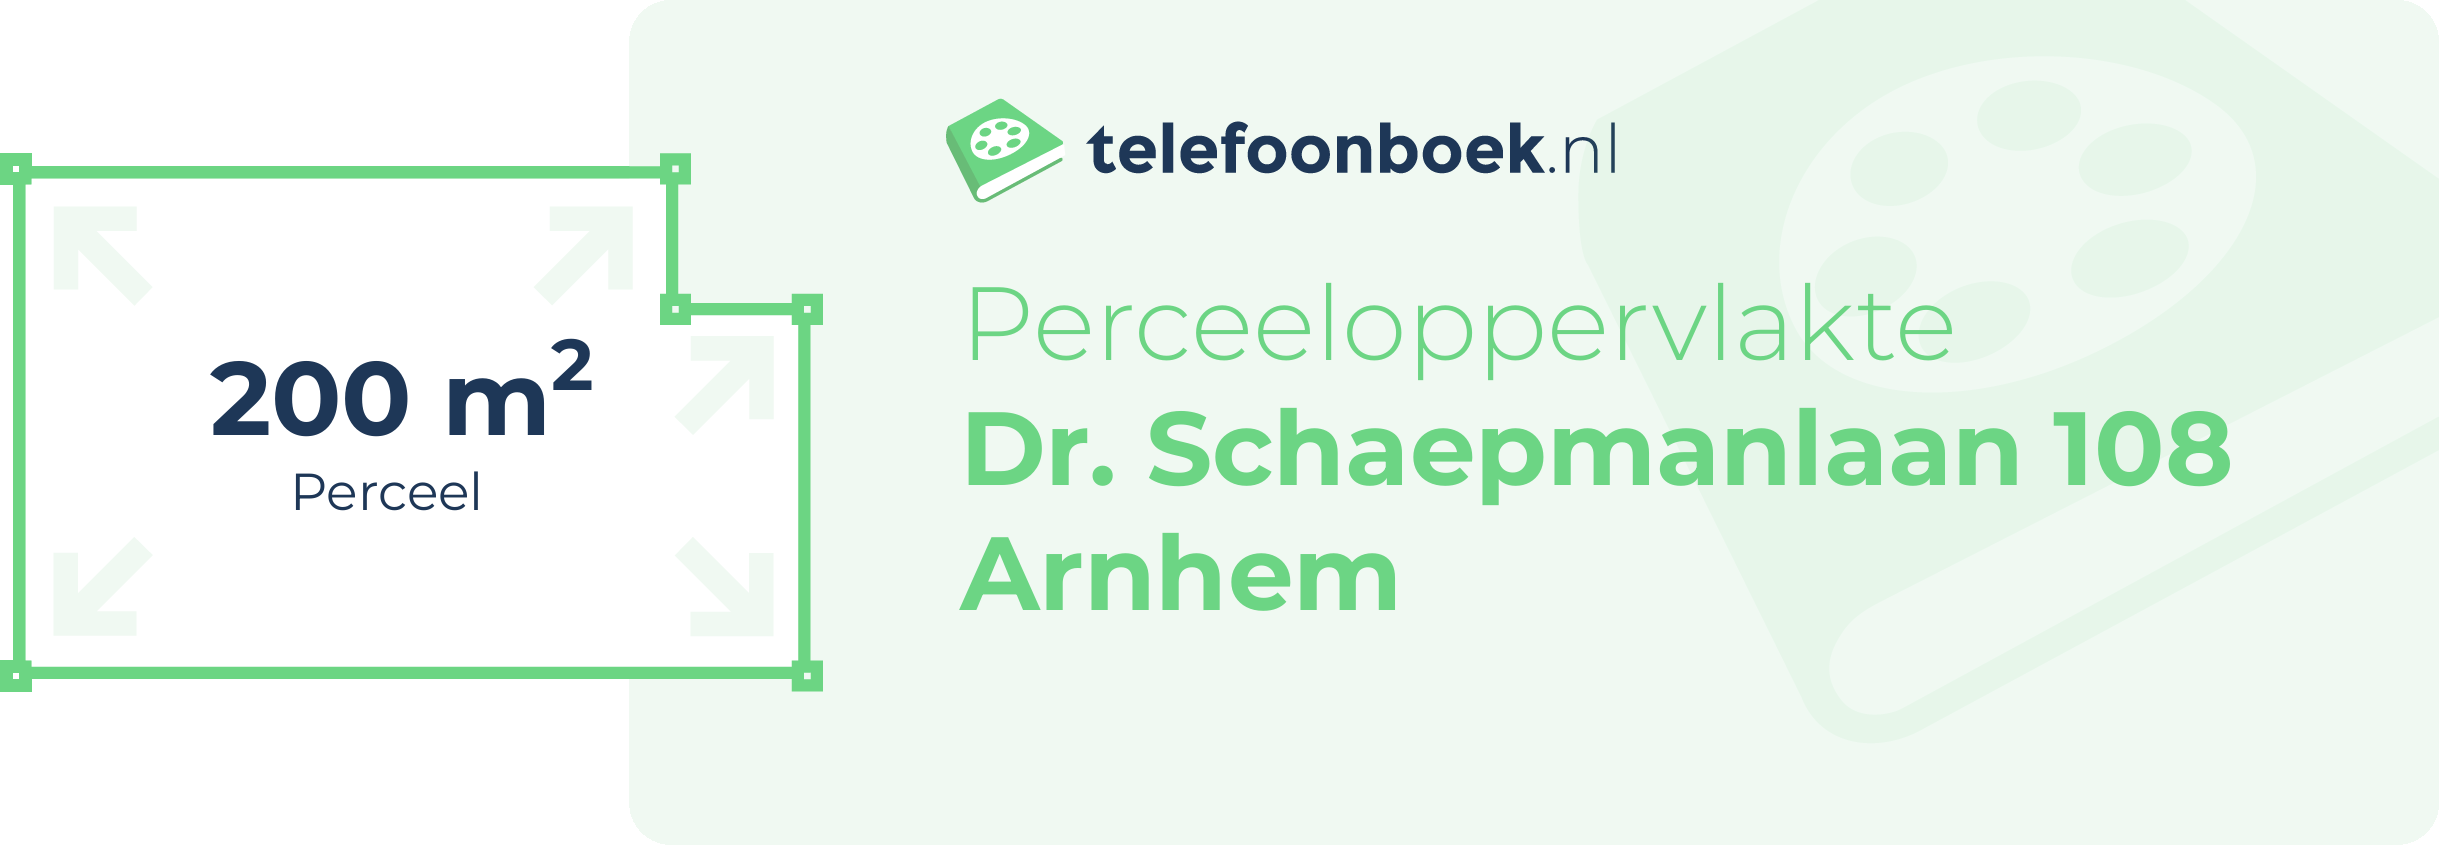 Perceeloppervlakte Dr. Schaepmanlaan 108 Arnhem